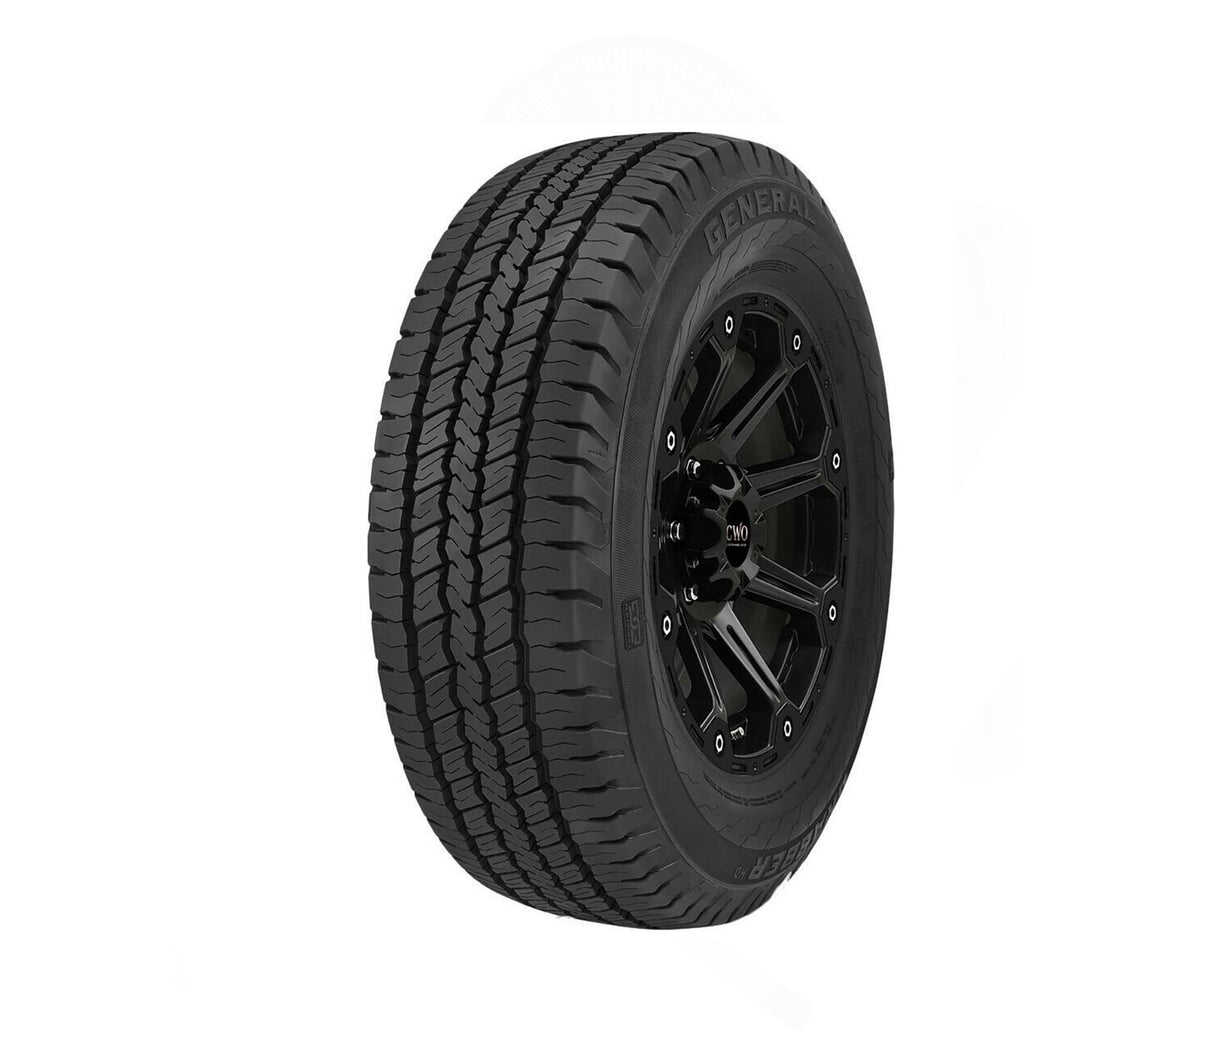 Neumático Lt245/75R16 120/116S Grabber Hts60 General Tire